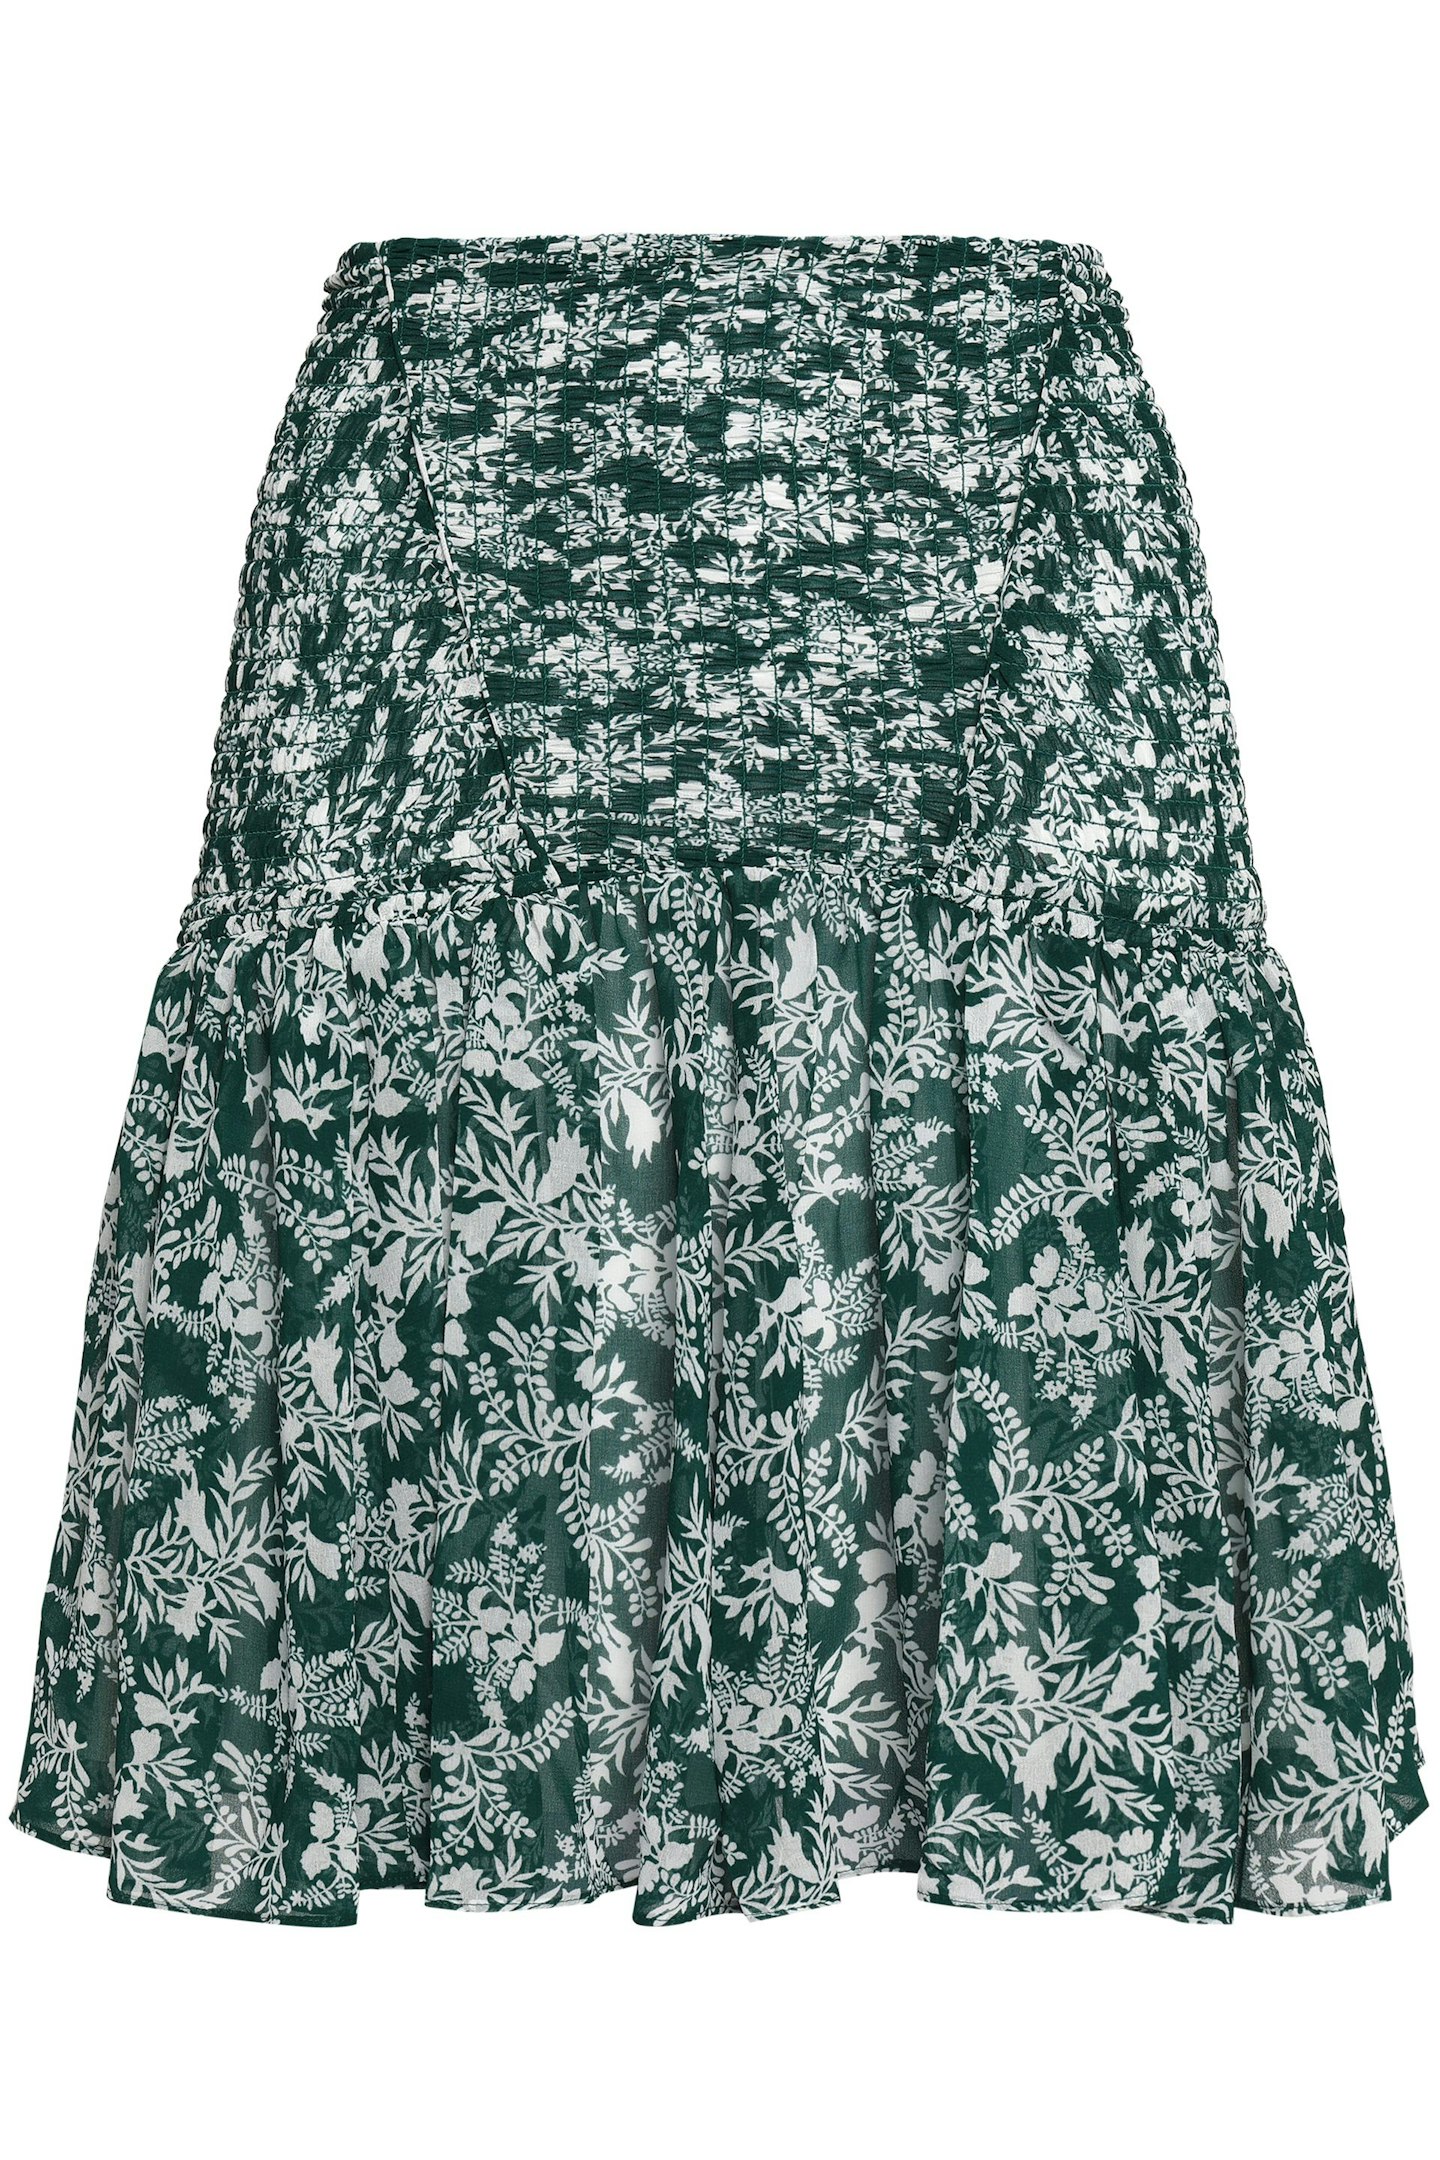 Shirred floral-print chiffon mini skirt by Maje, £102